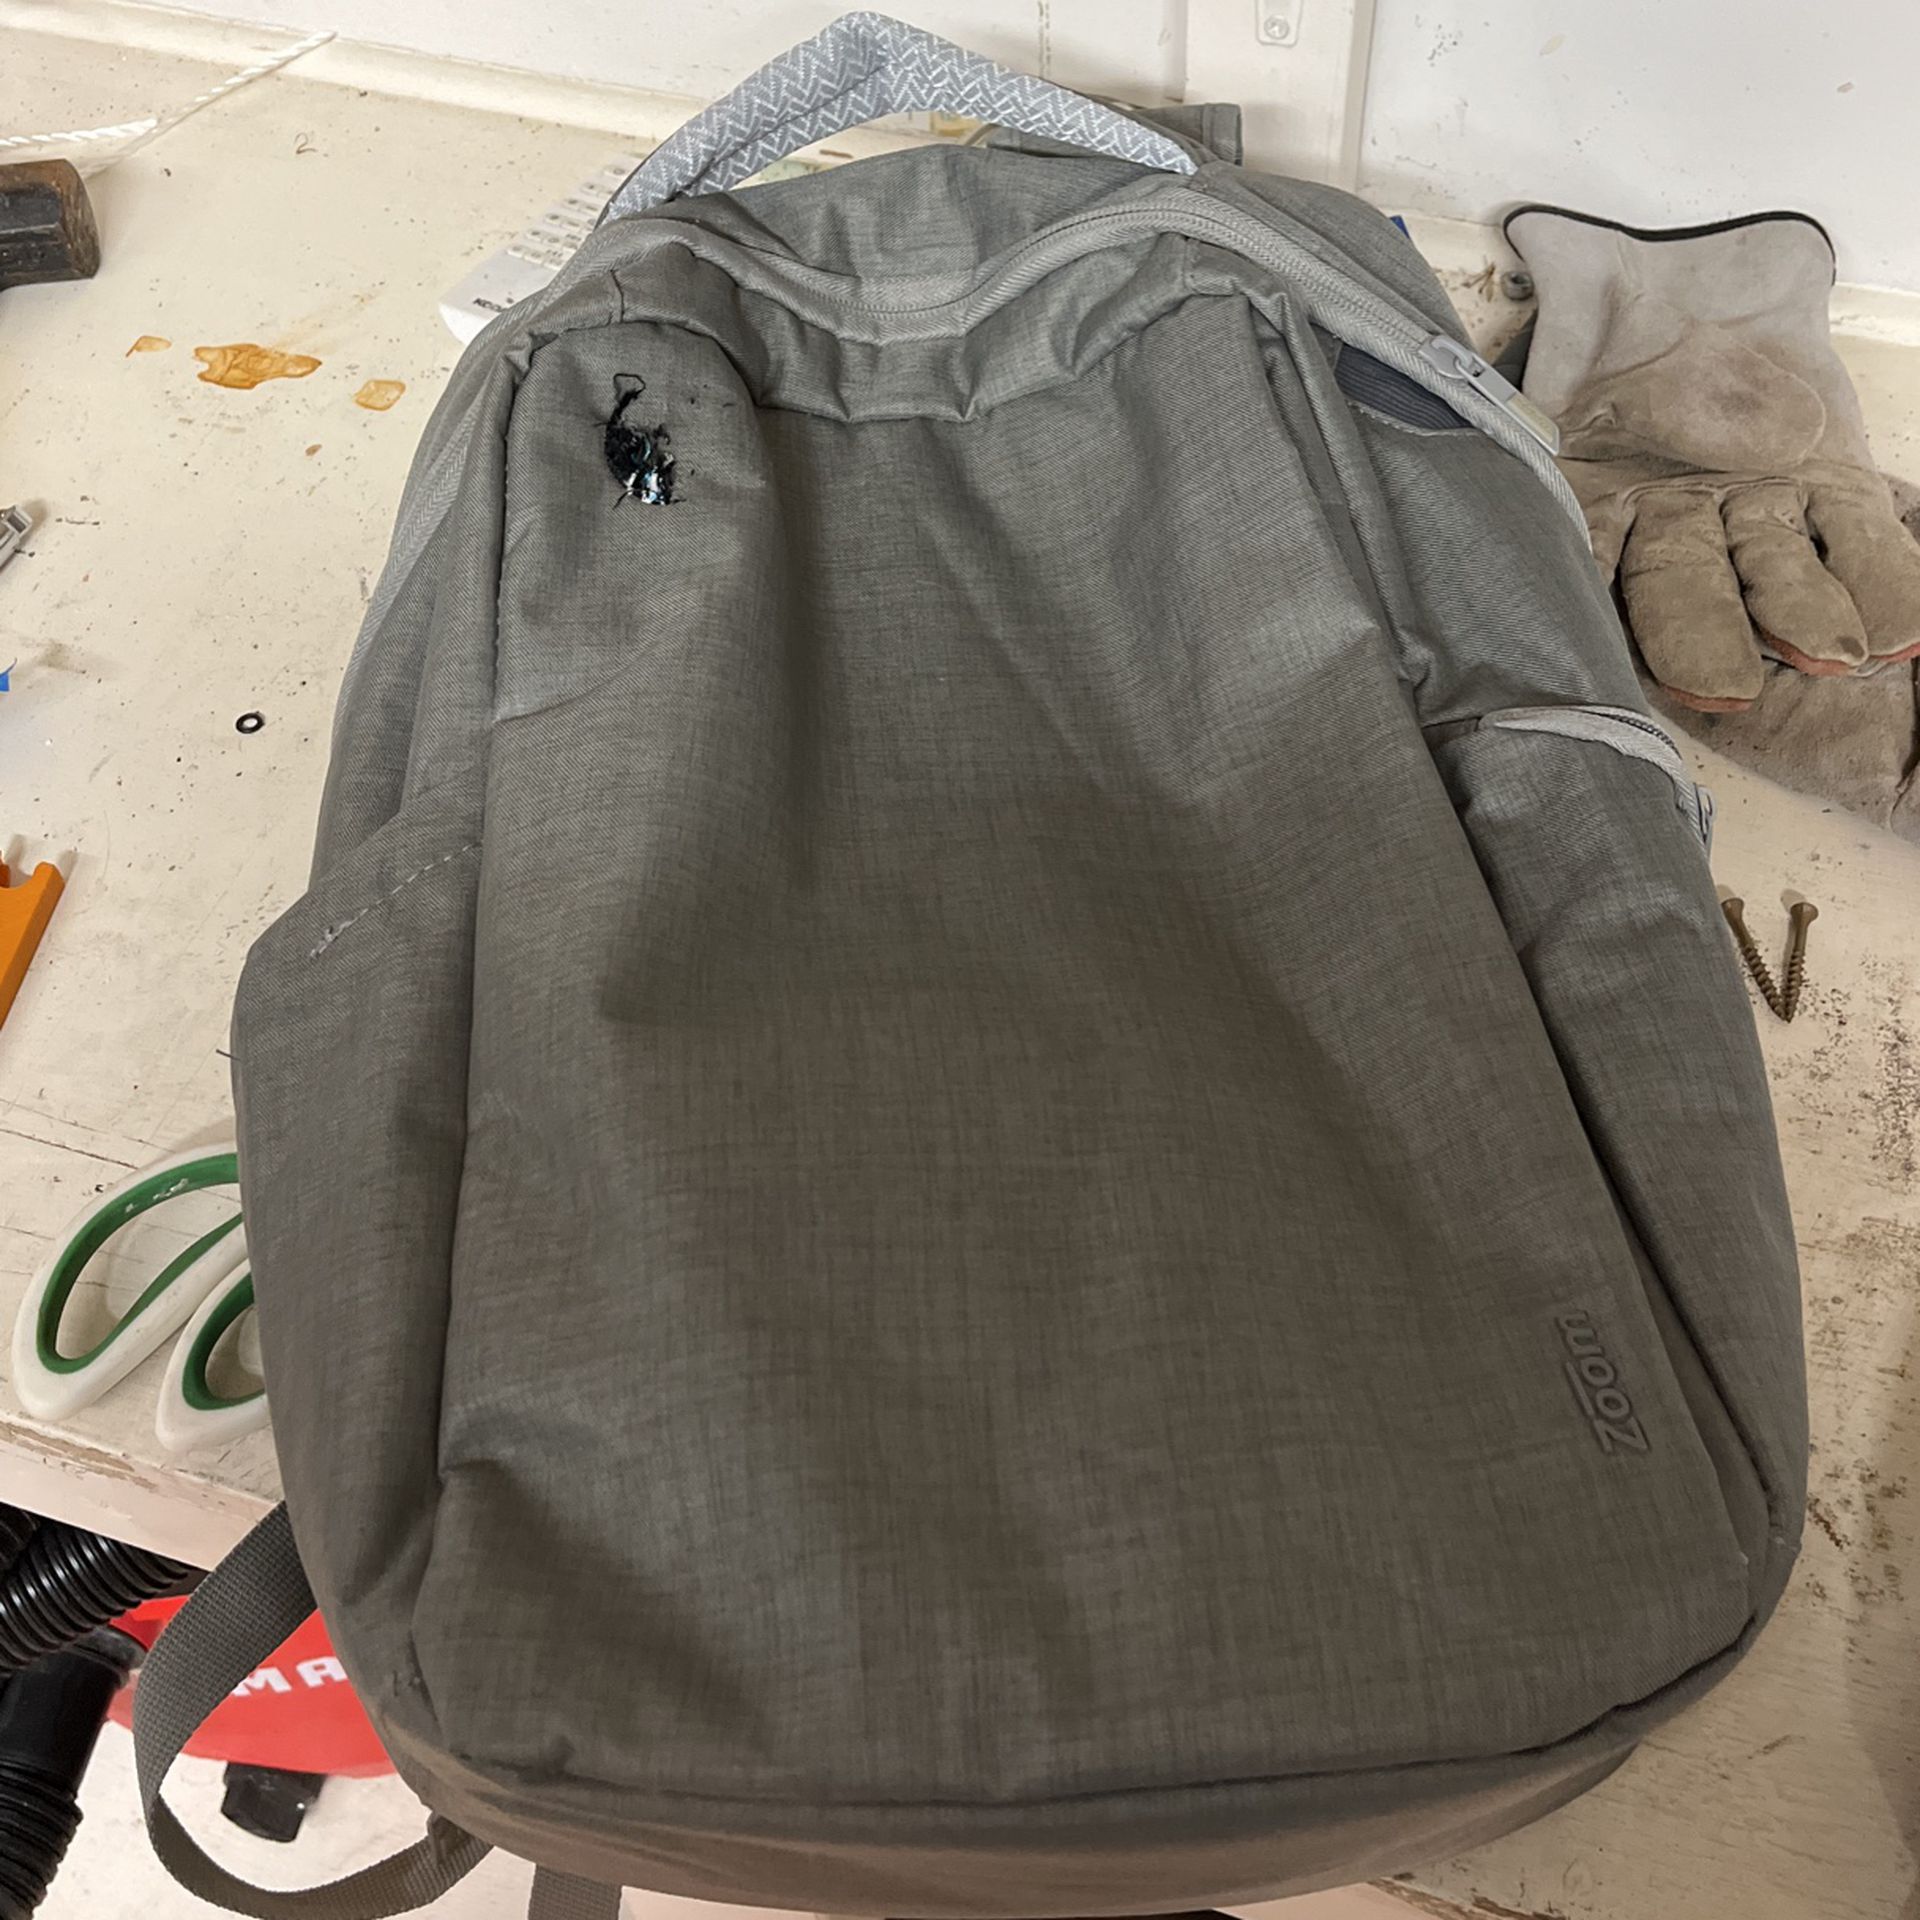 Zoom Laptop Backpack 